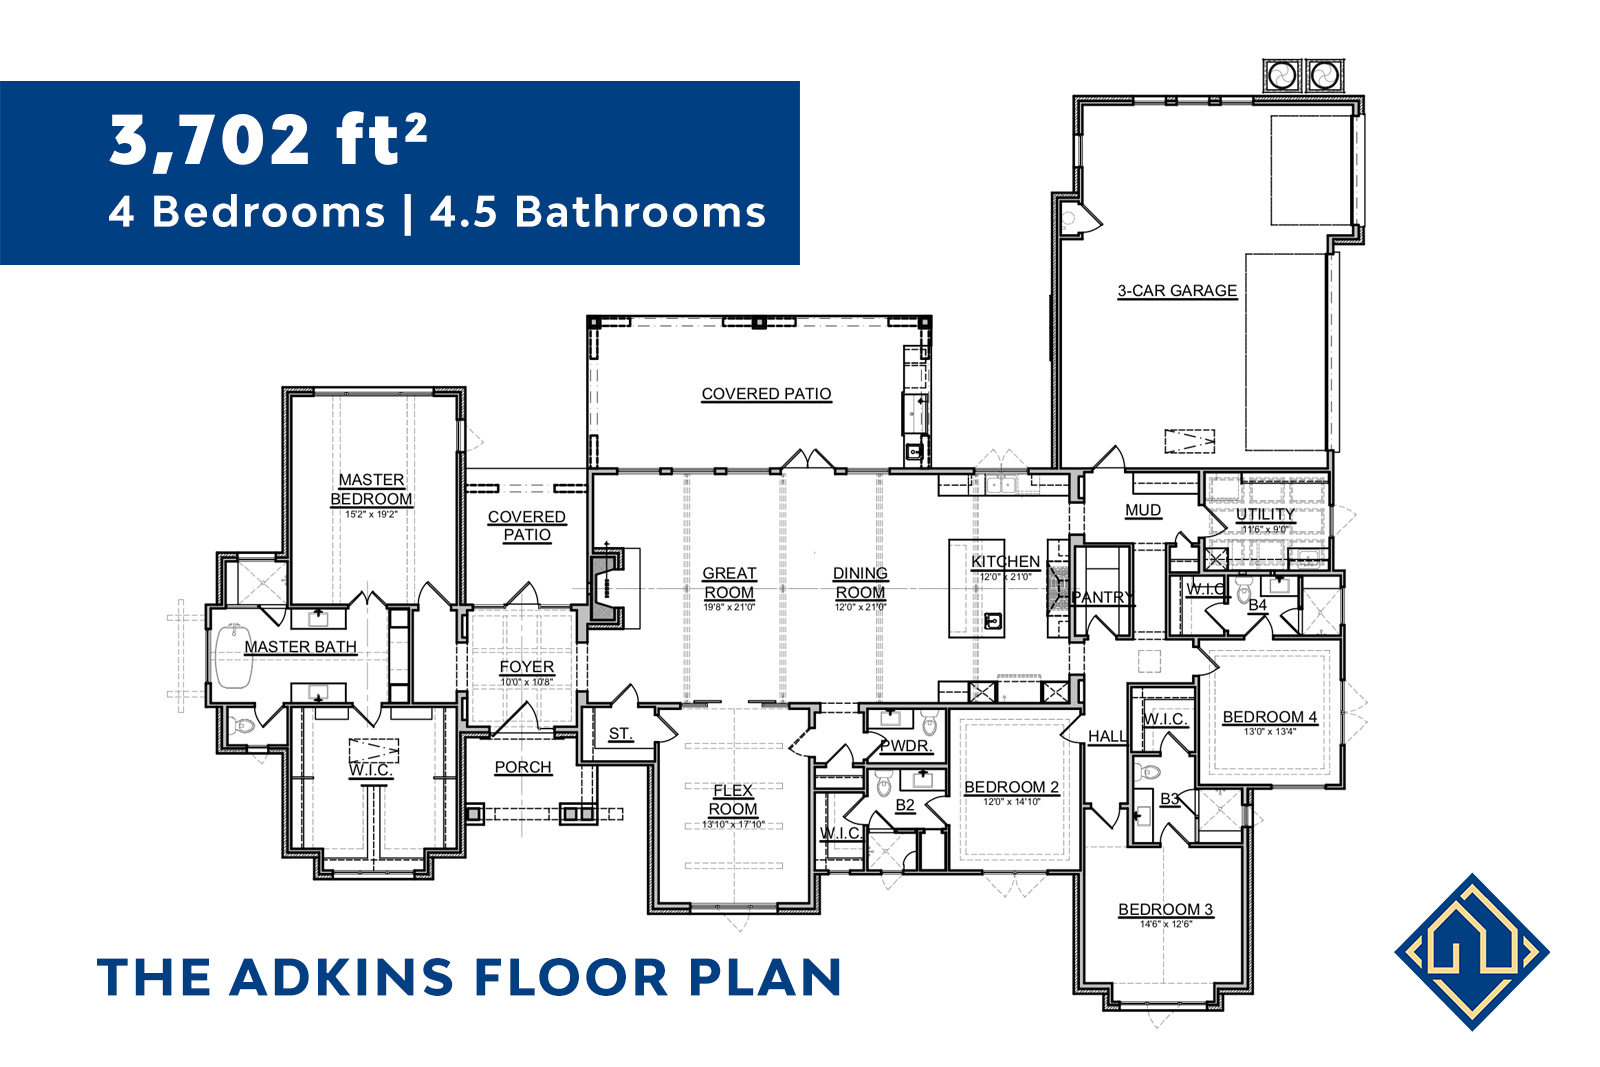 4 Bedroom Floor Plan for San Antonio Custom Home